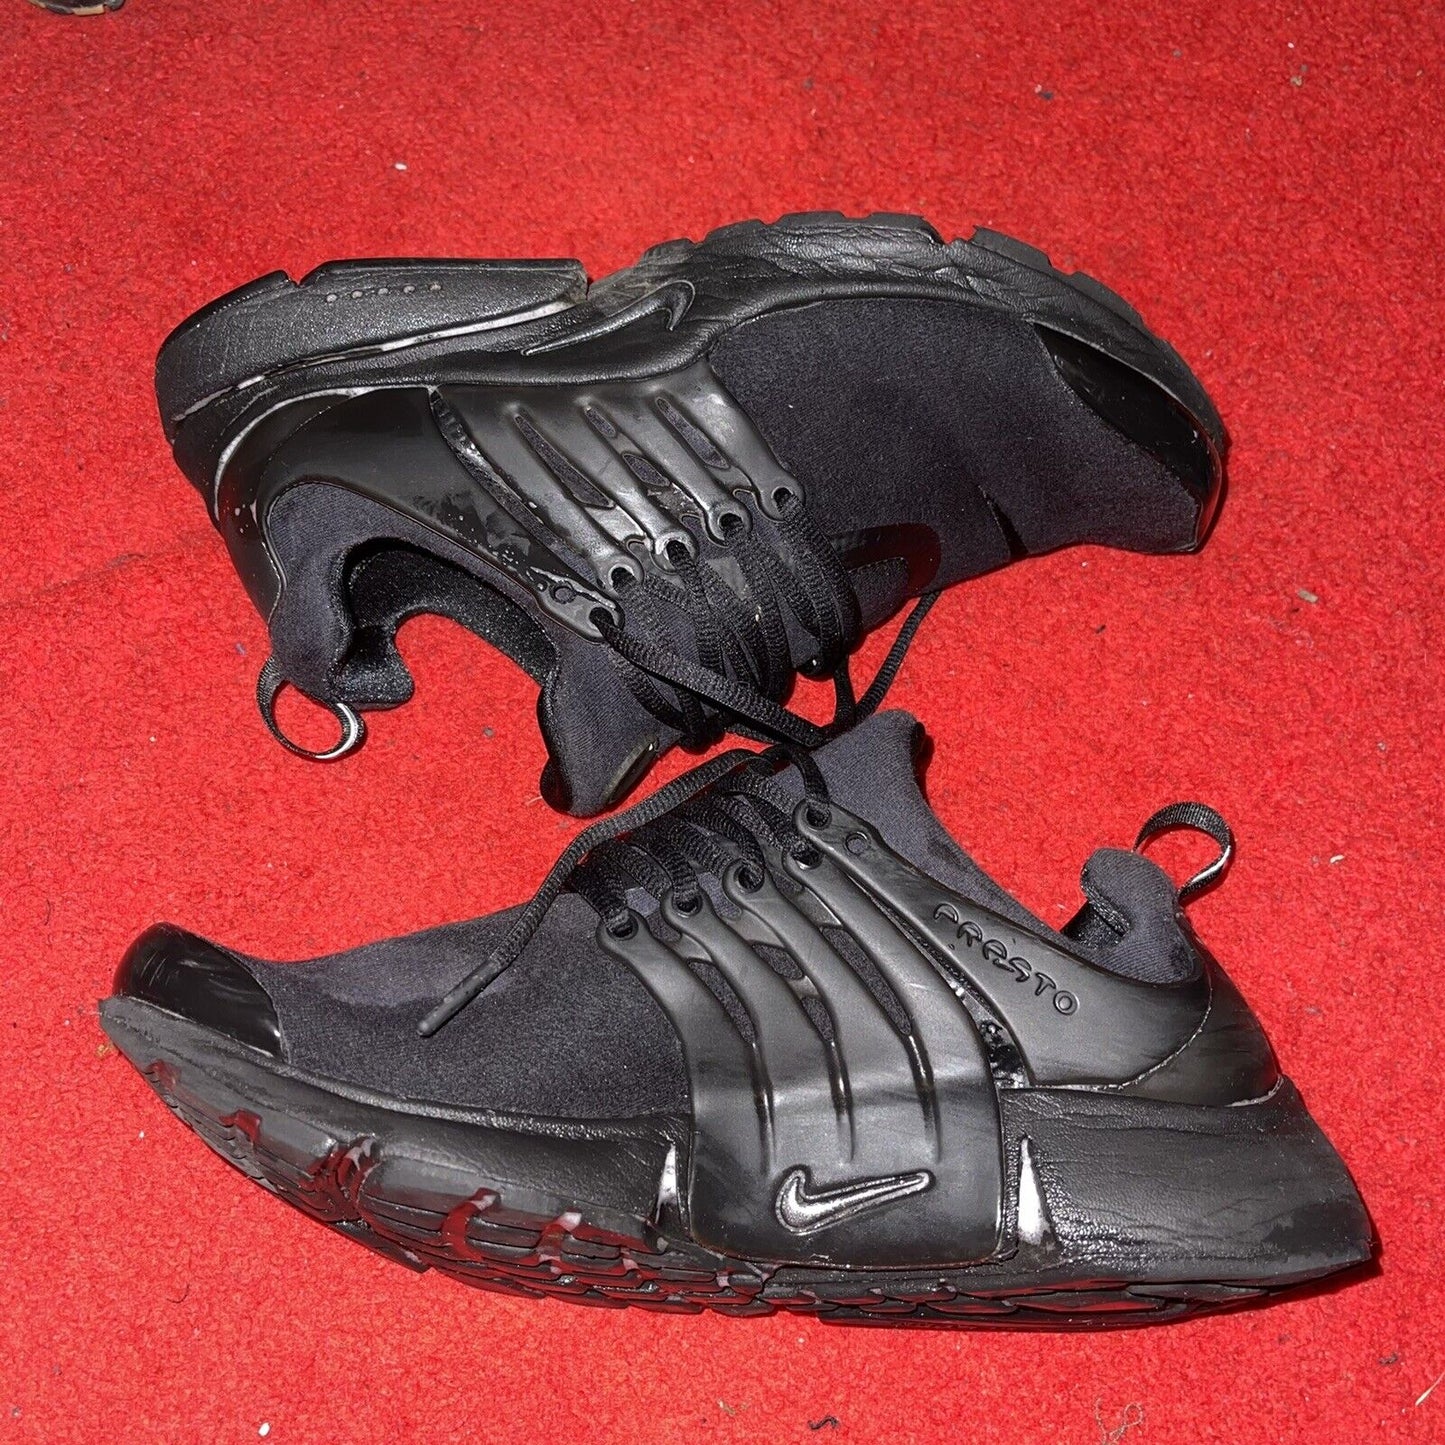 Nike 305919-009 Air Presto Triple Black Casual Running Shoe Size S (8-9)